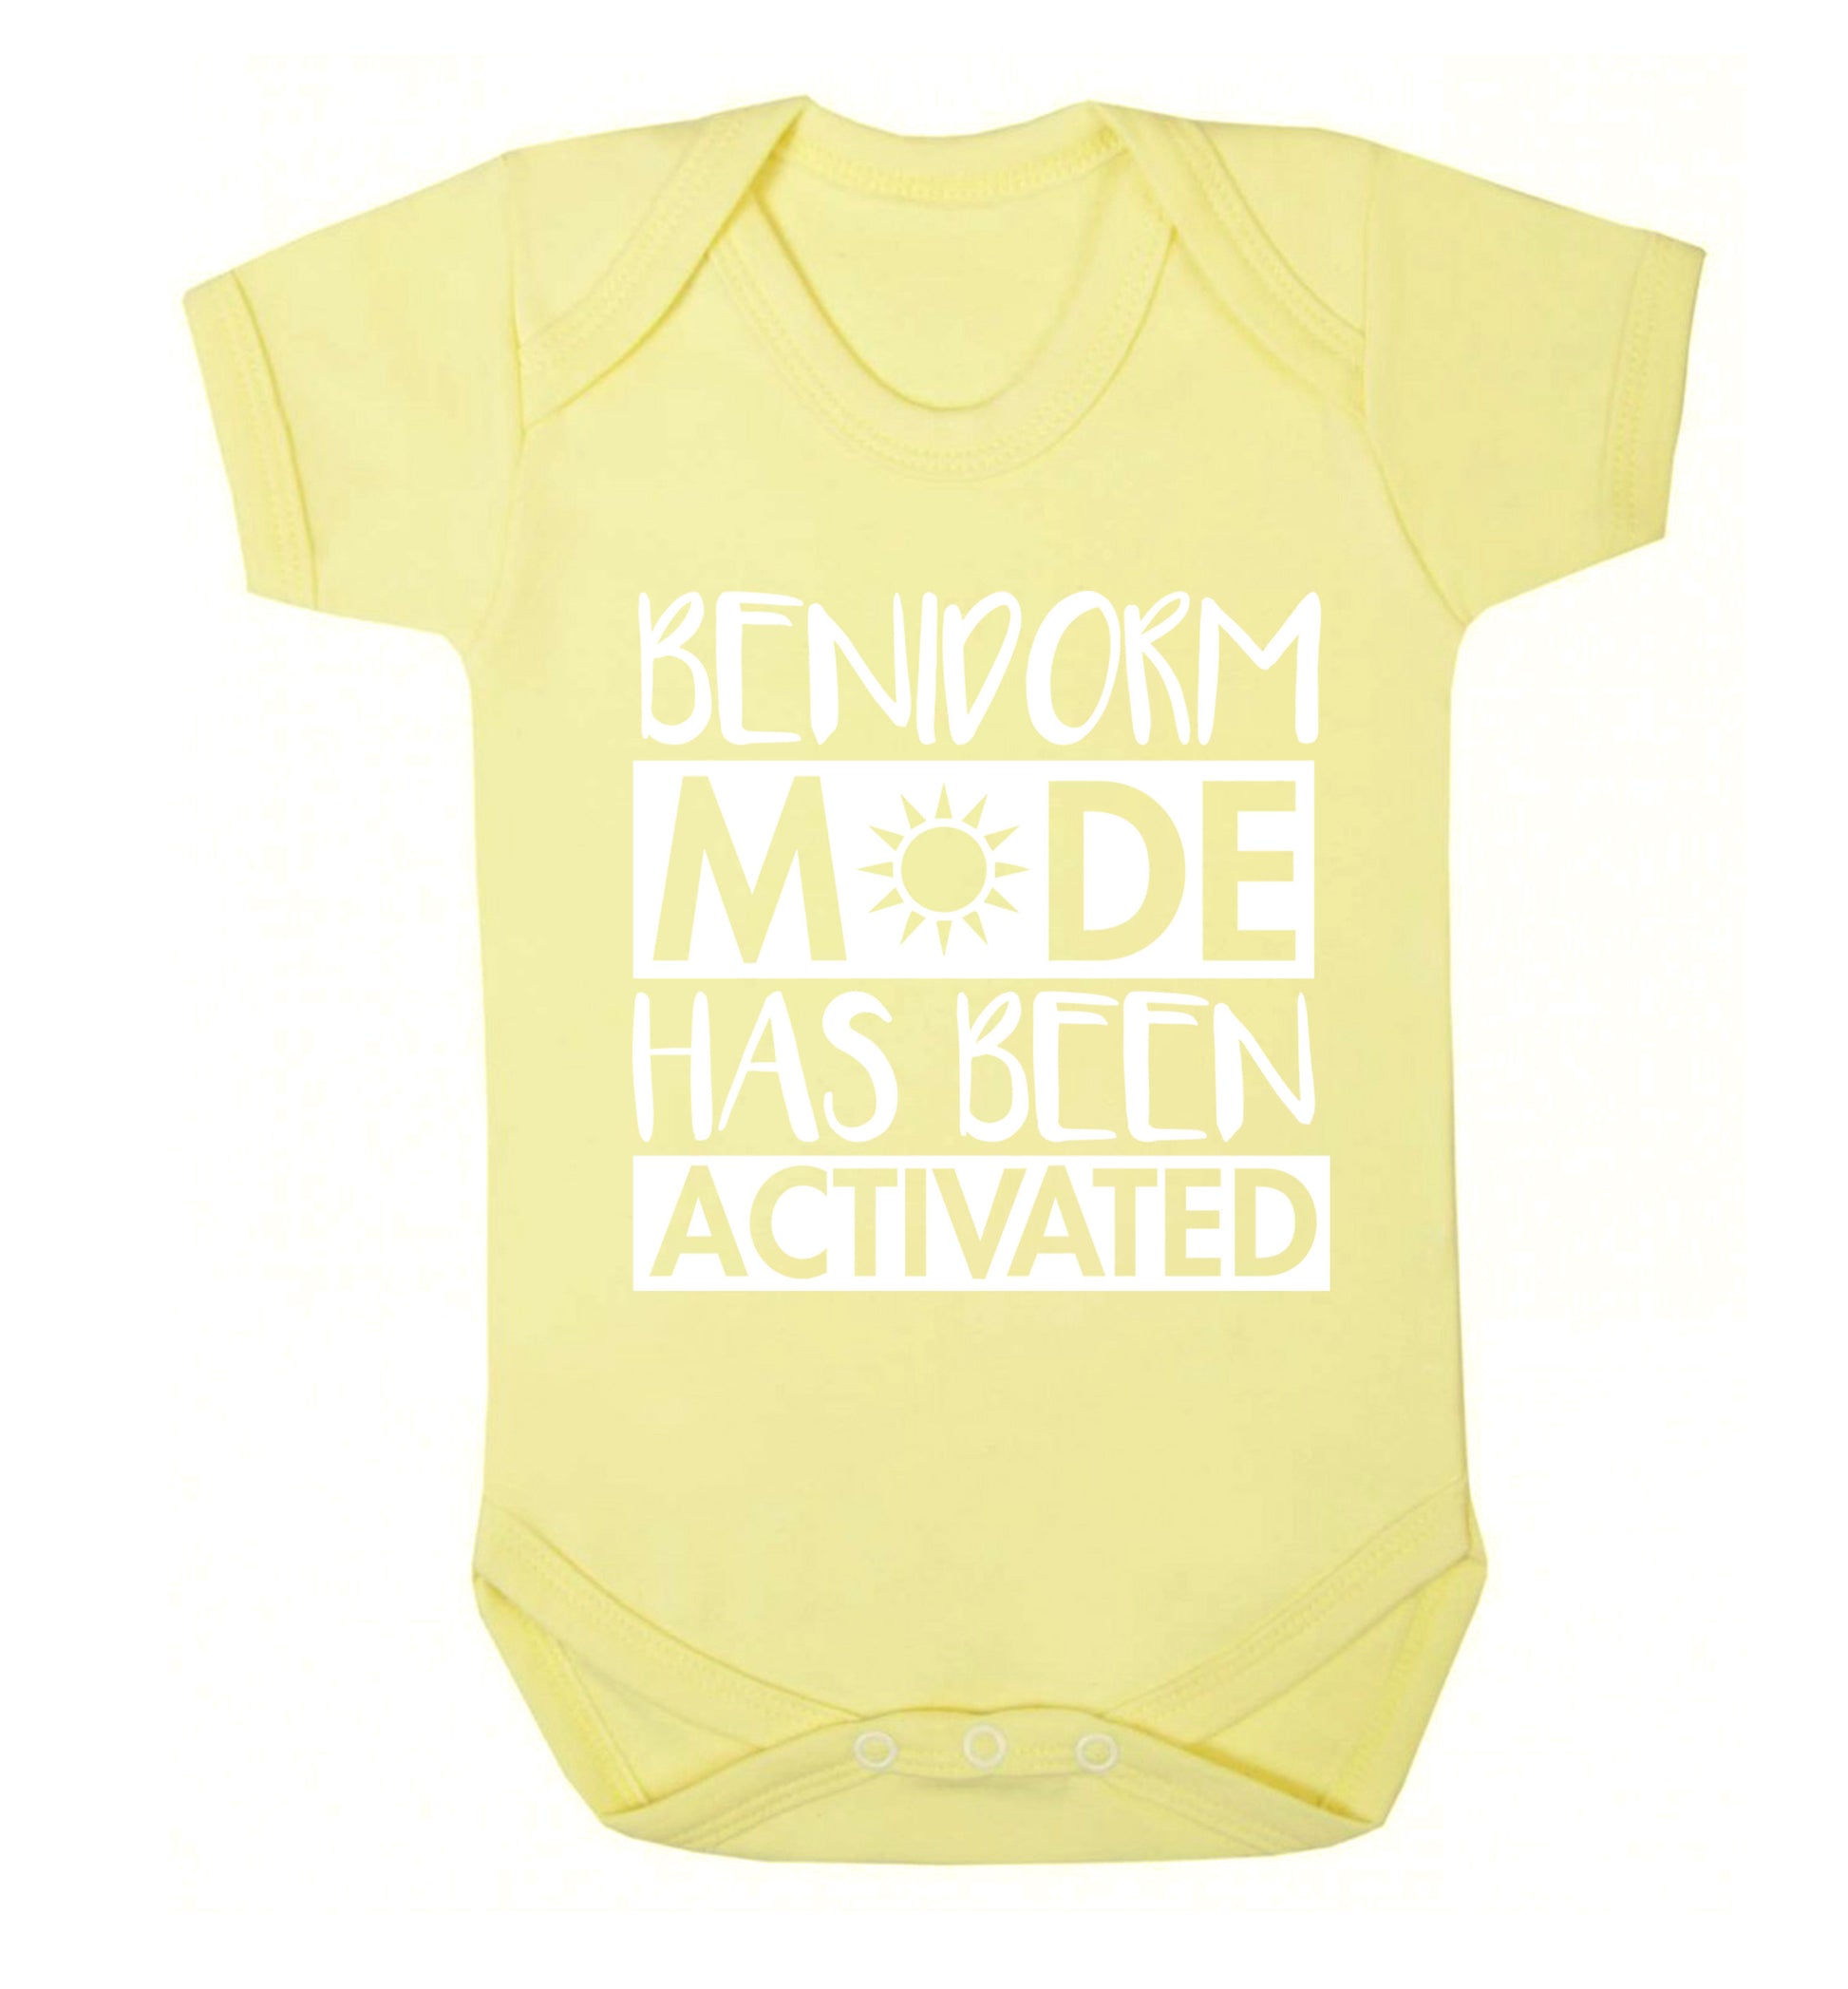 Benidorm mode has been activated Baby Vest pale yellow 18-24 months